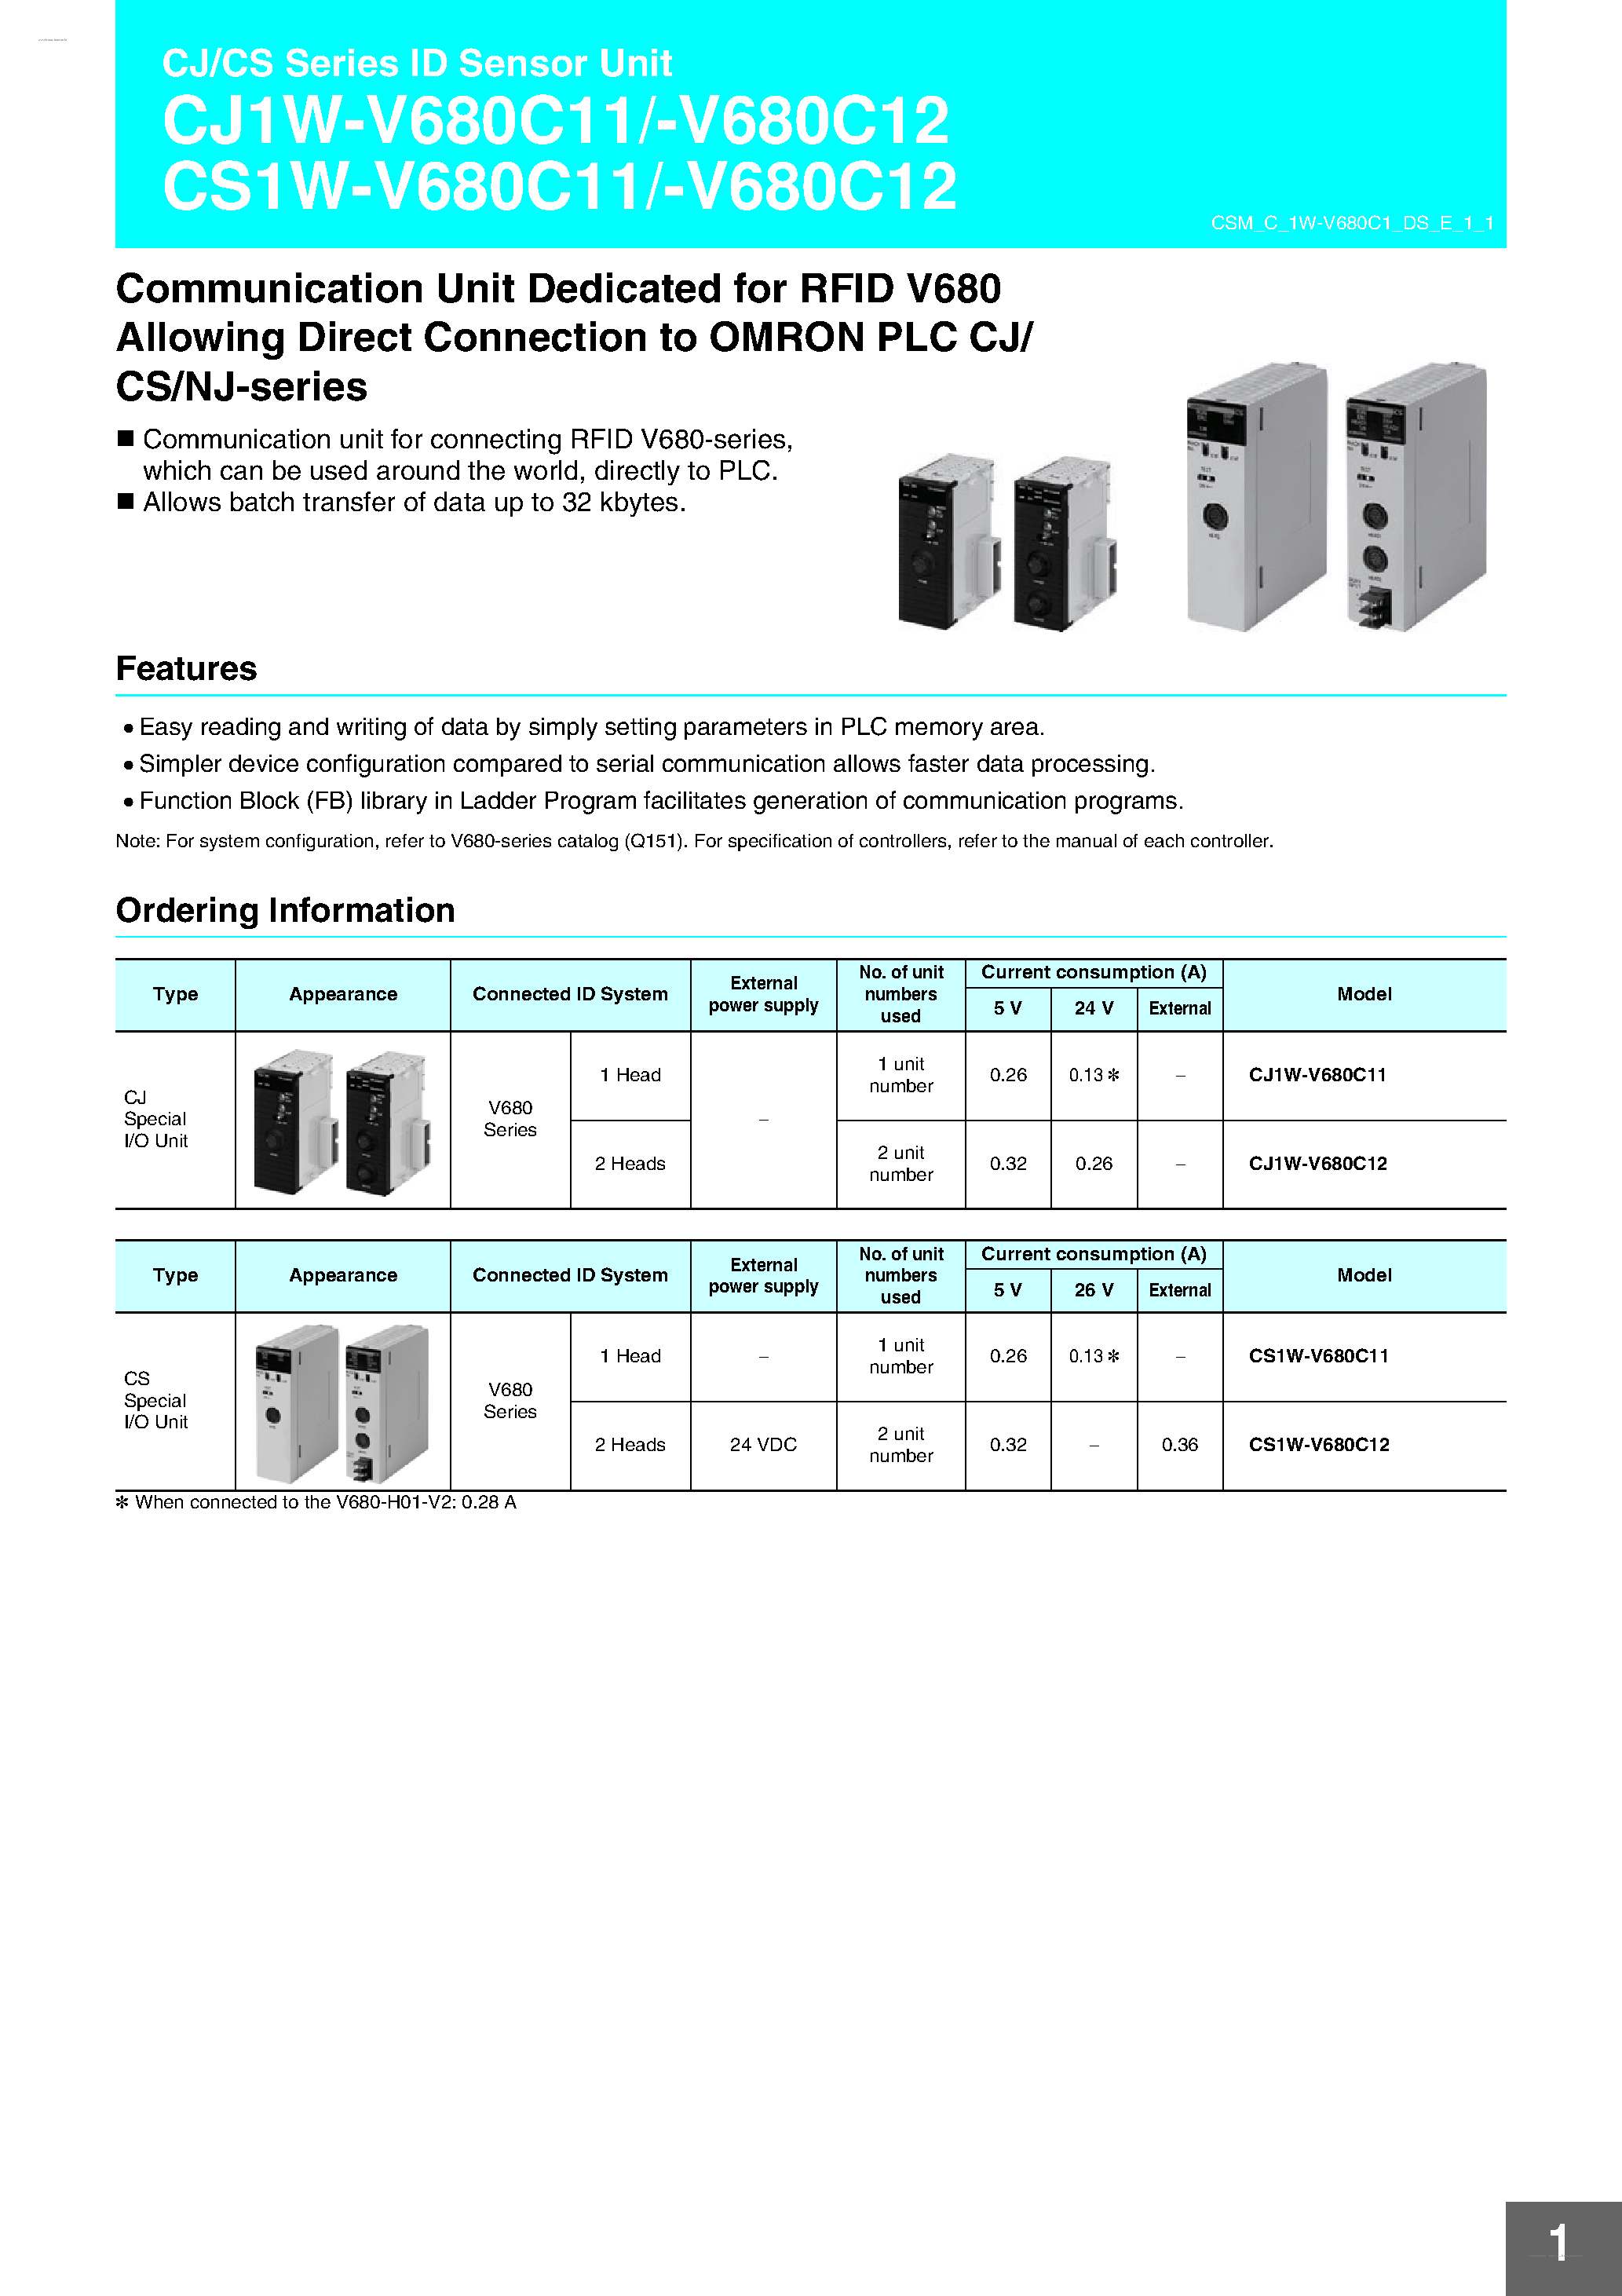 Даташит CS1W-V680C11-(CS1W-V680C11 / CS1W-V680C12) CJ/CS Series ID Sensor Unit страница 1